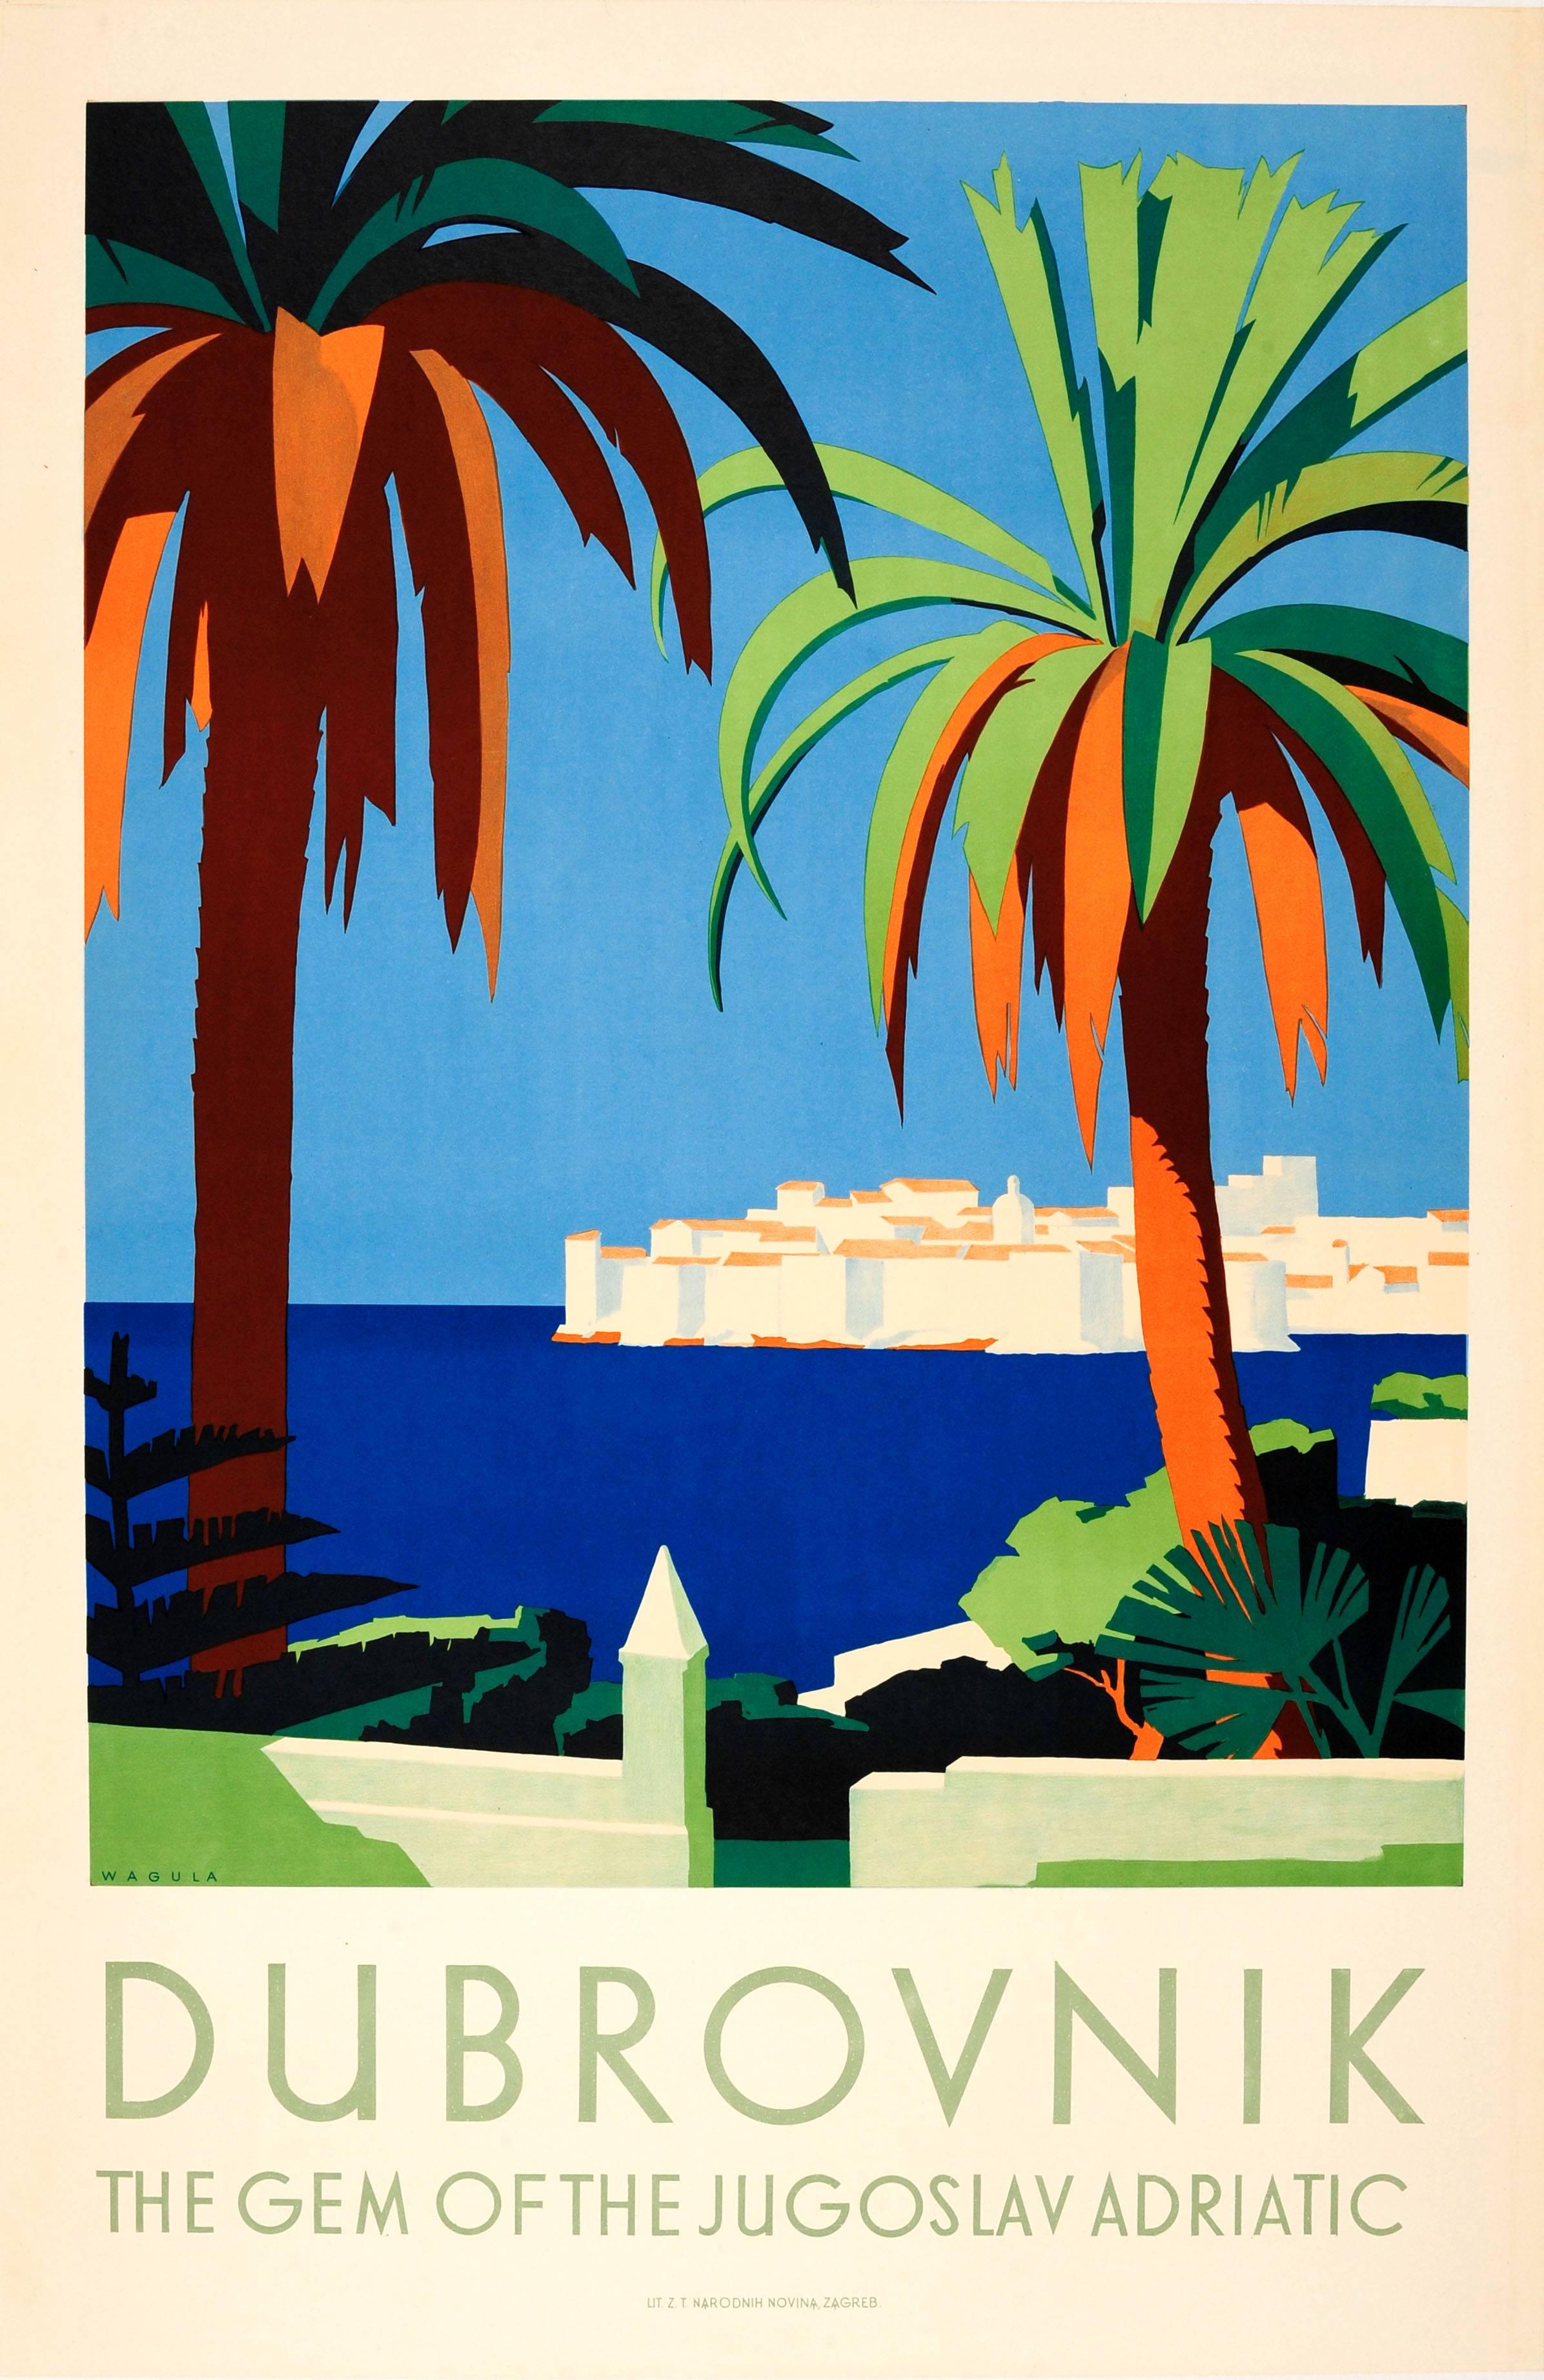 Hans Wagula Print - Original Vintage Art Deco Poster For Dubrovnik The Gem Of The Jugoslav Adriatic